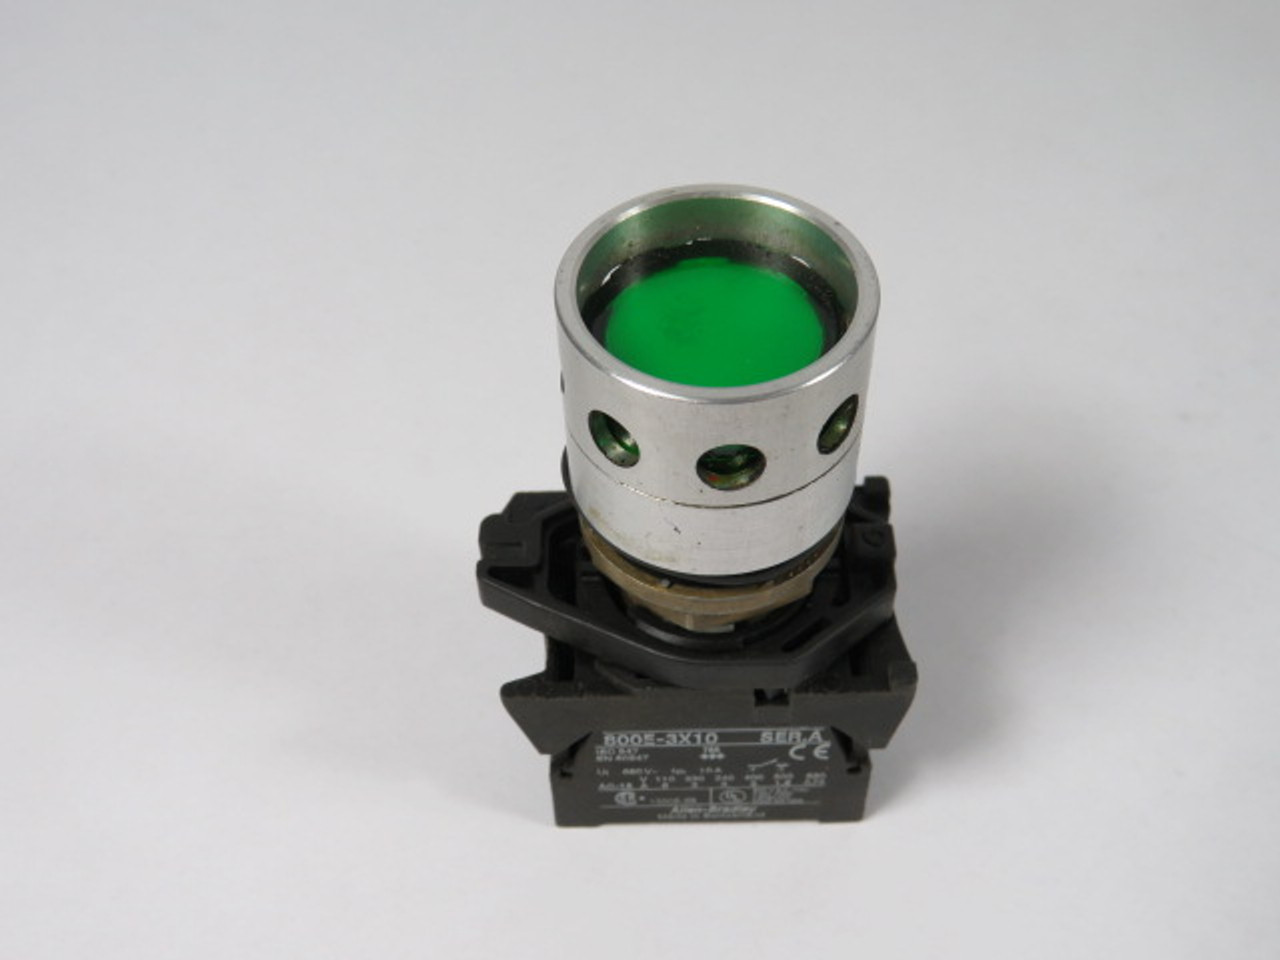 Allen-Bradley 800EM-LG3-3X10 Guarded Push Button Green 1NO USED